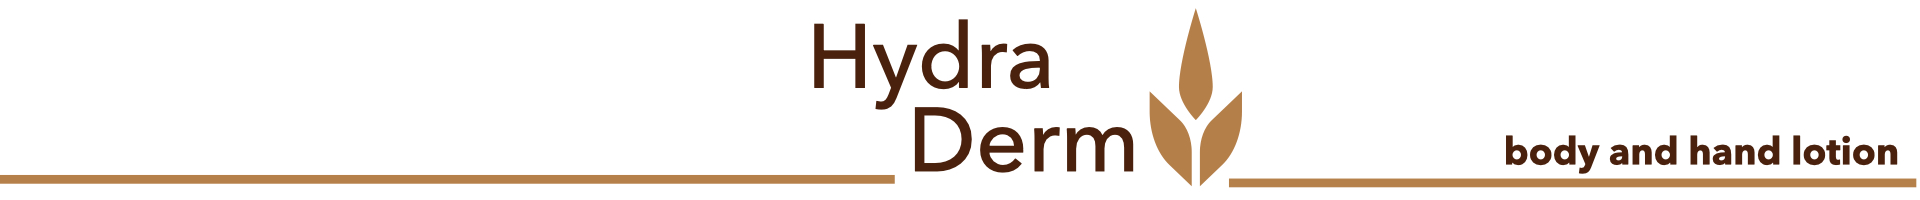 HydraDerm